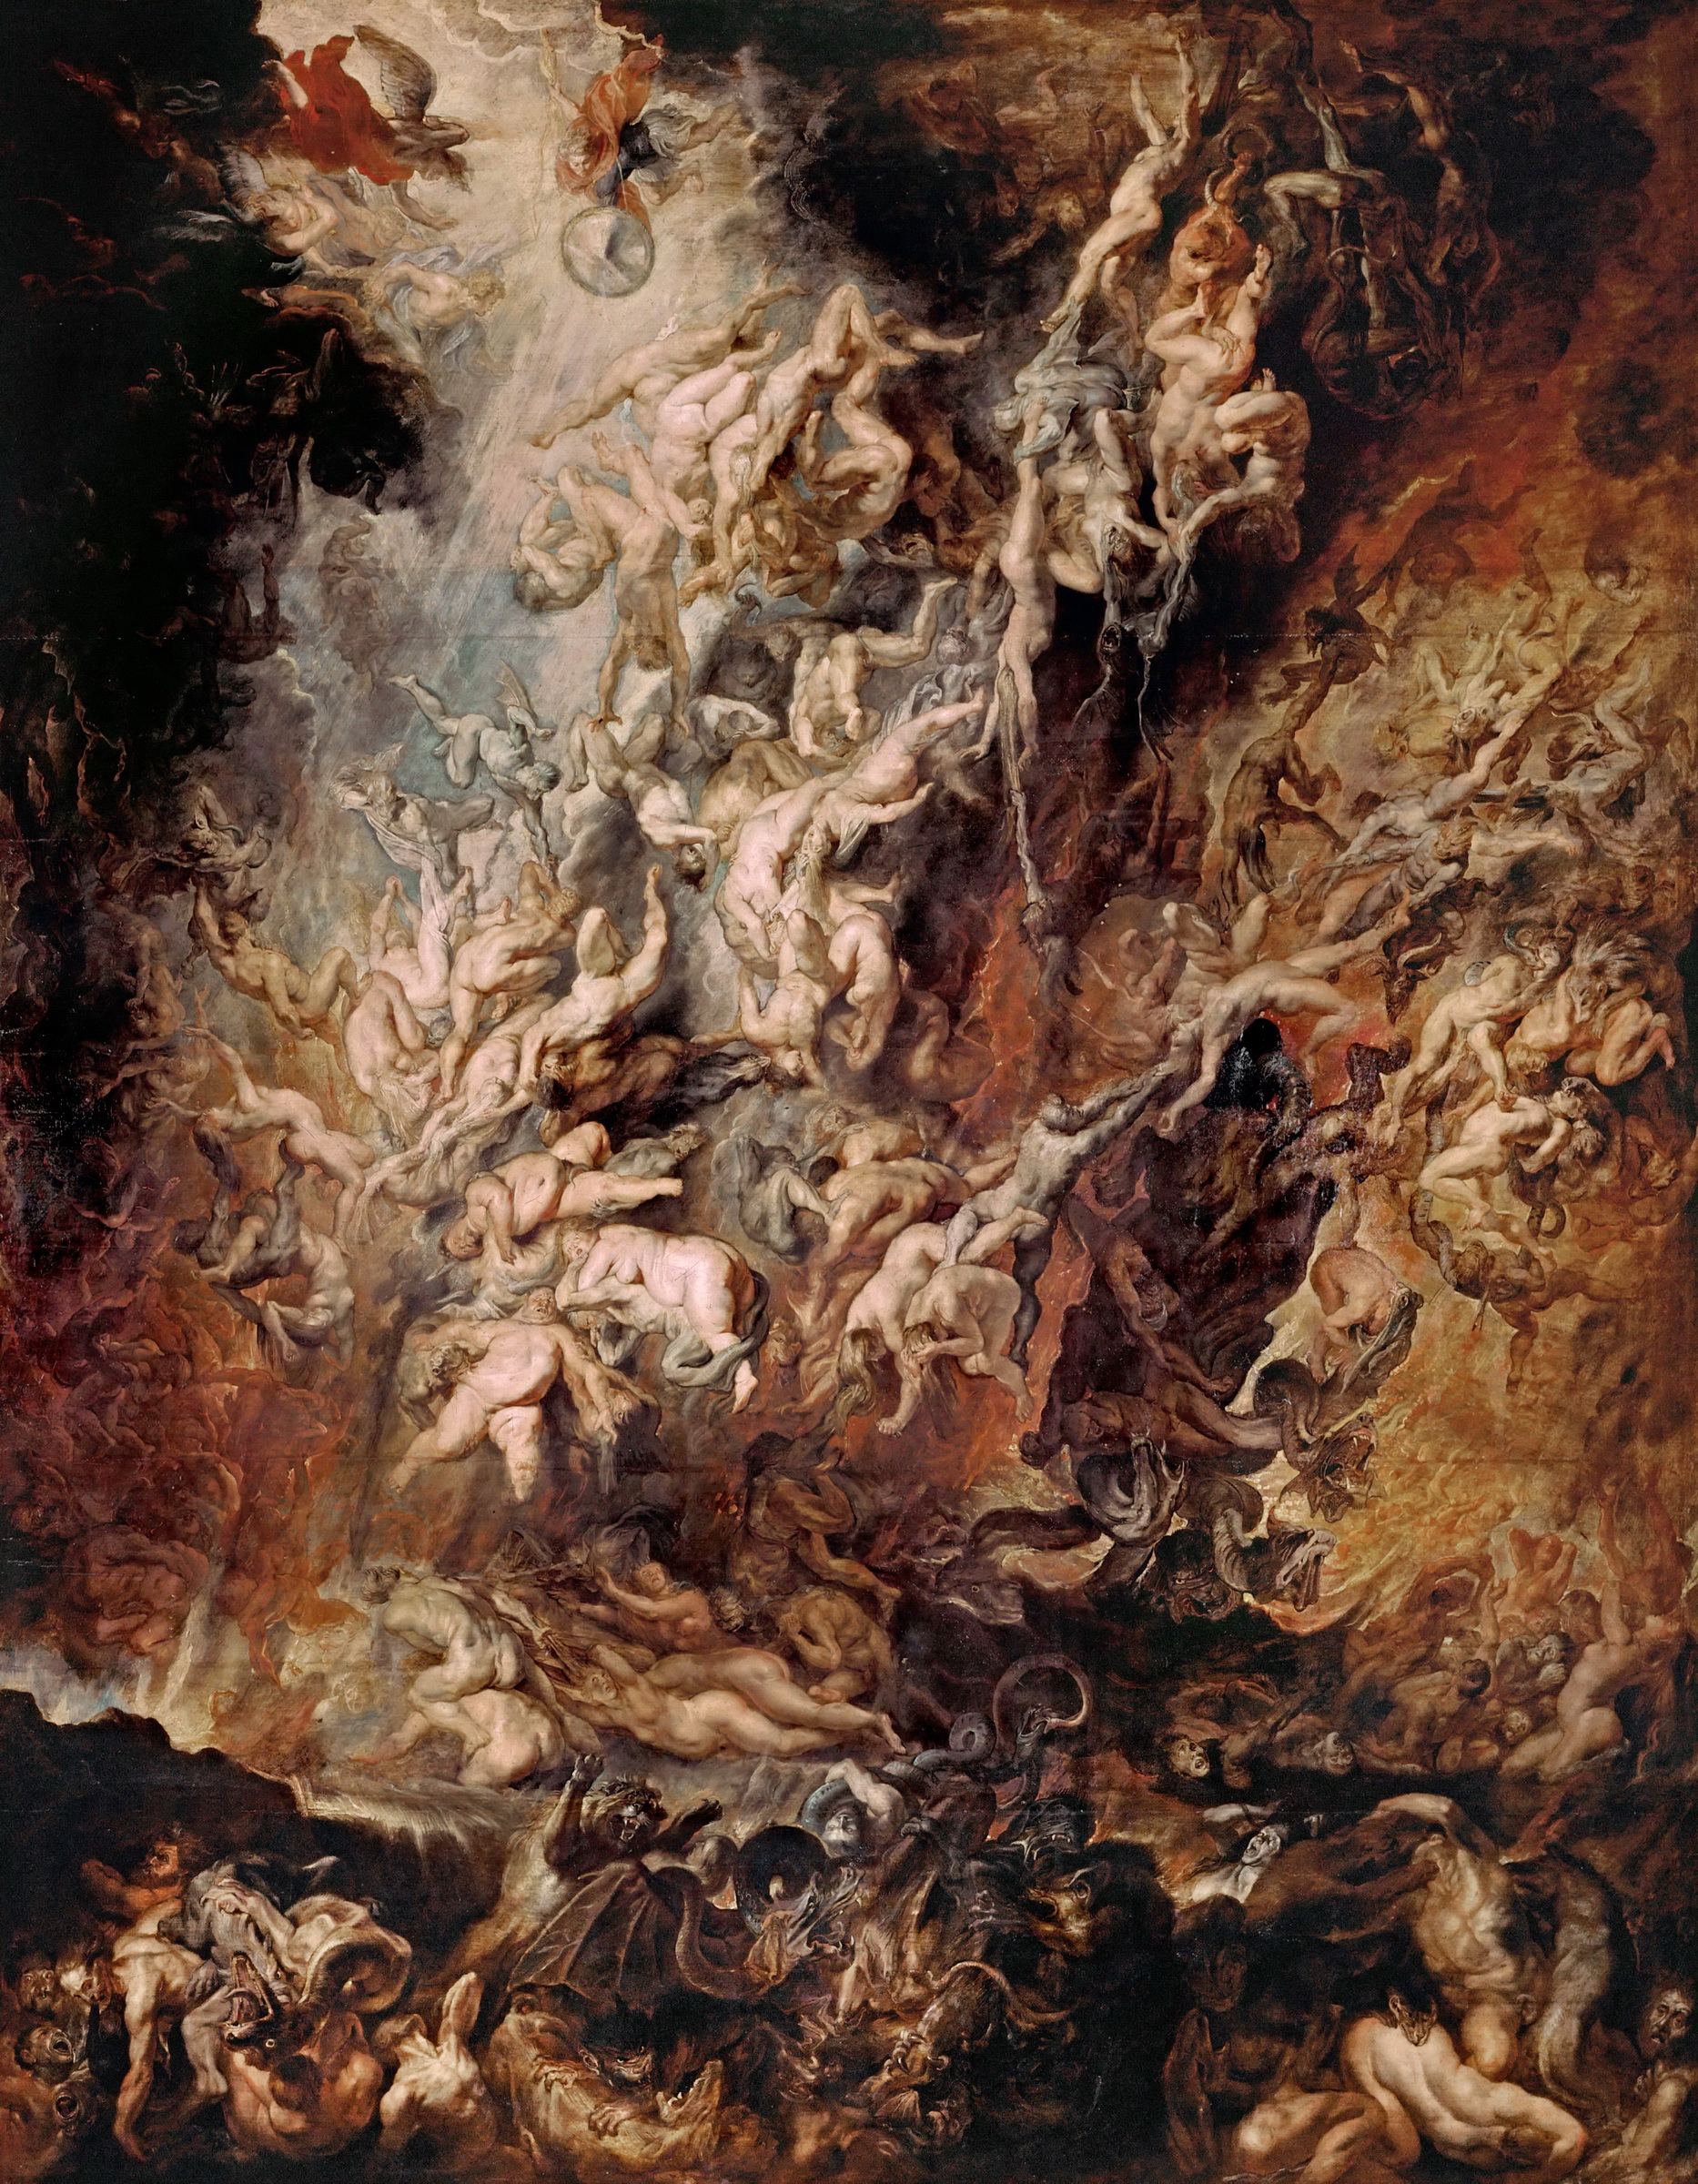 La caduta dei dannati by Peter Paul Rubens - 1620 - 2,86 x 2,24 m Alte Pinakothek